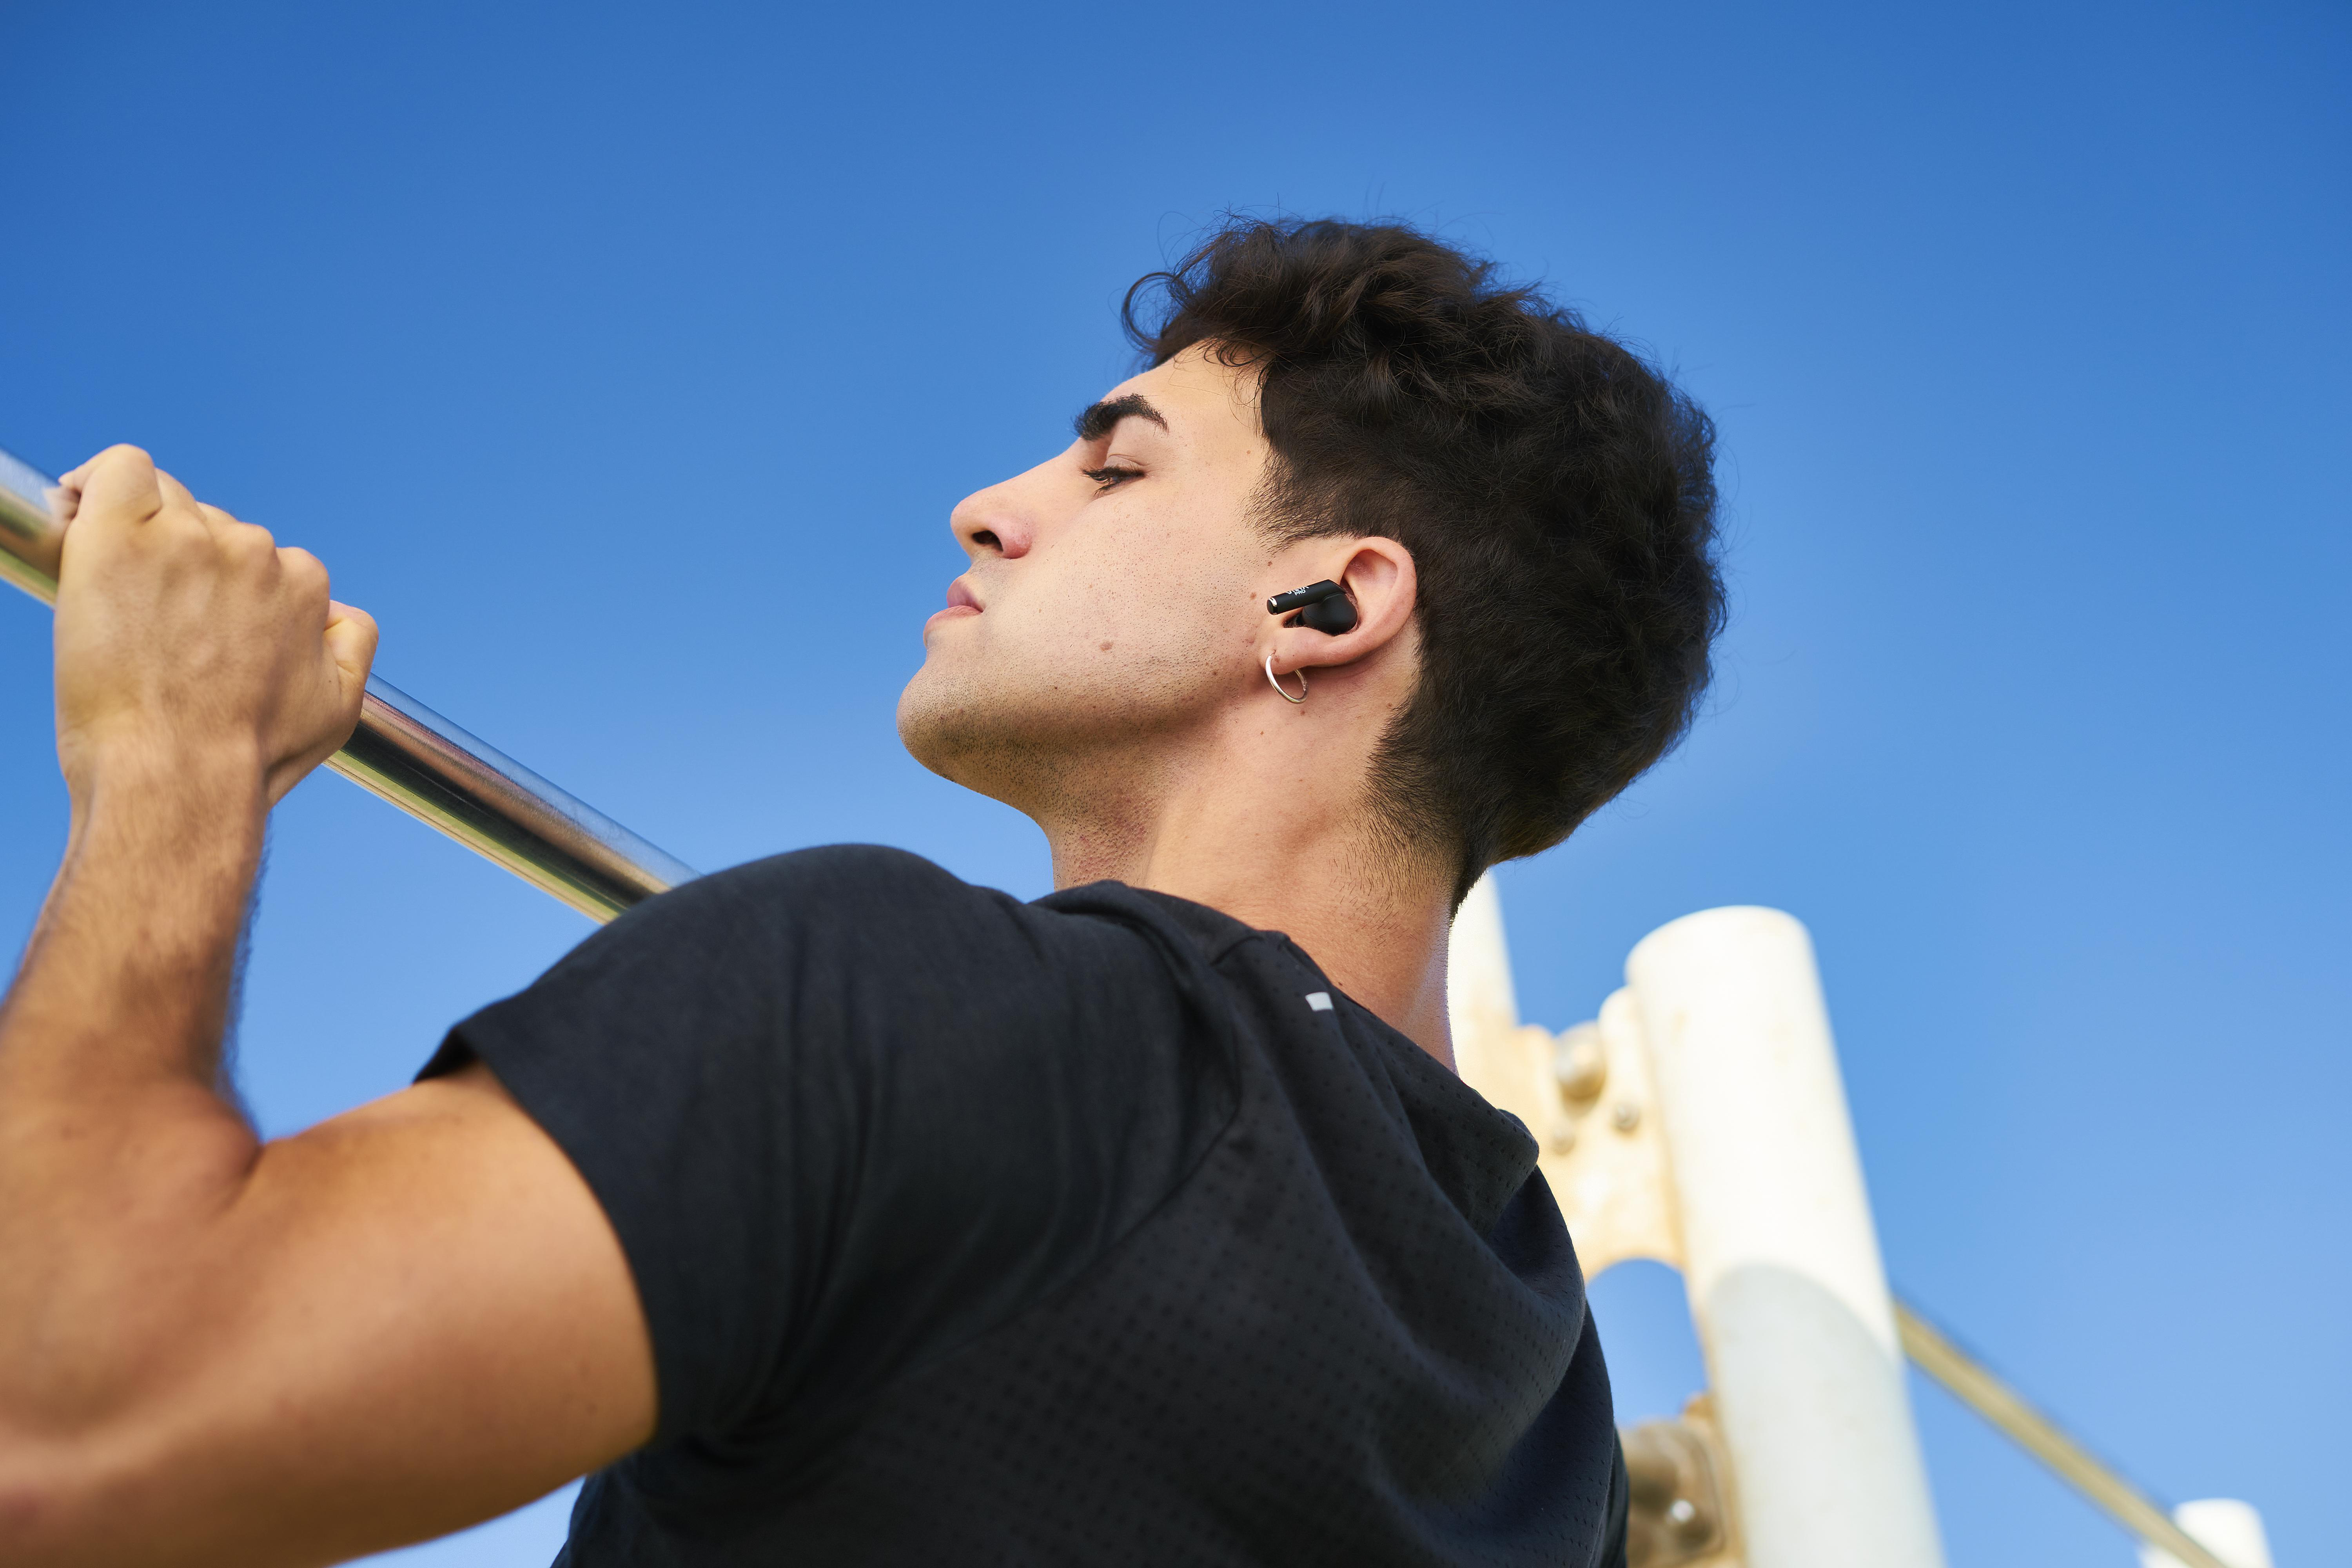 VIETA Fade Anc True Wireless, Bluetooth Kopfhörer Schwarz In-ear